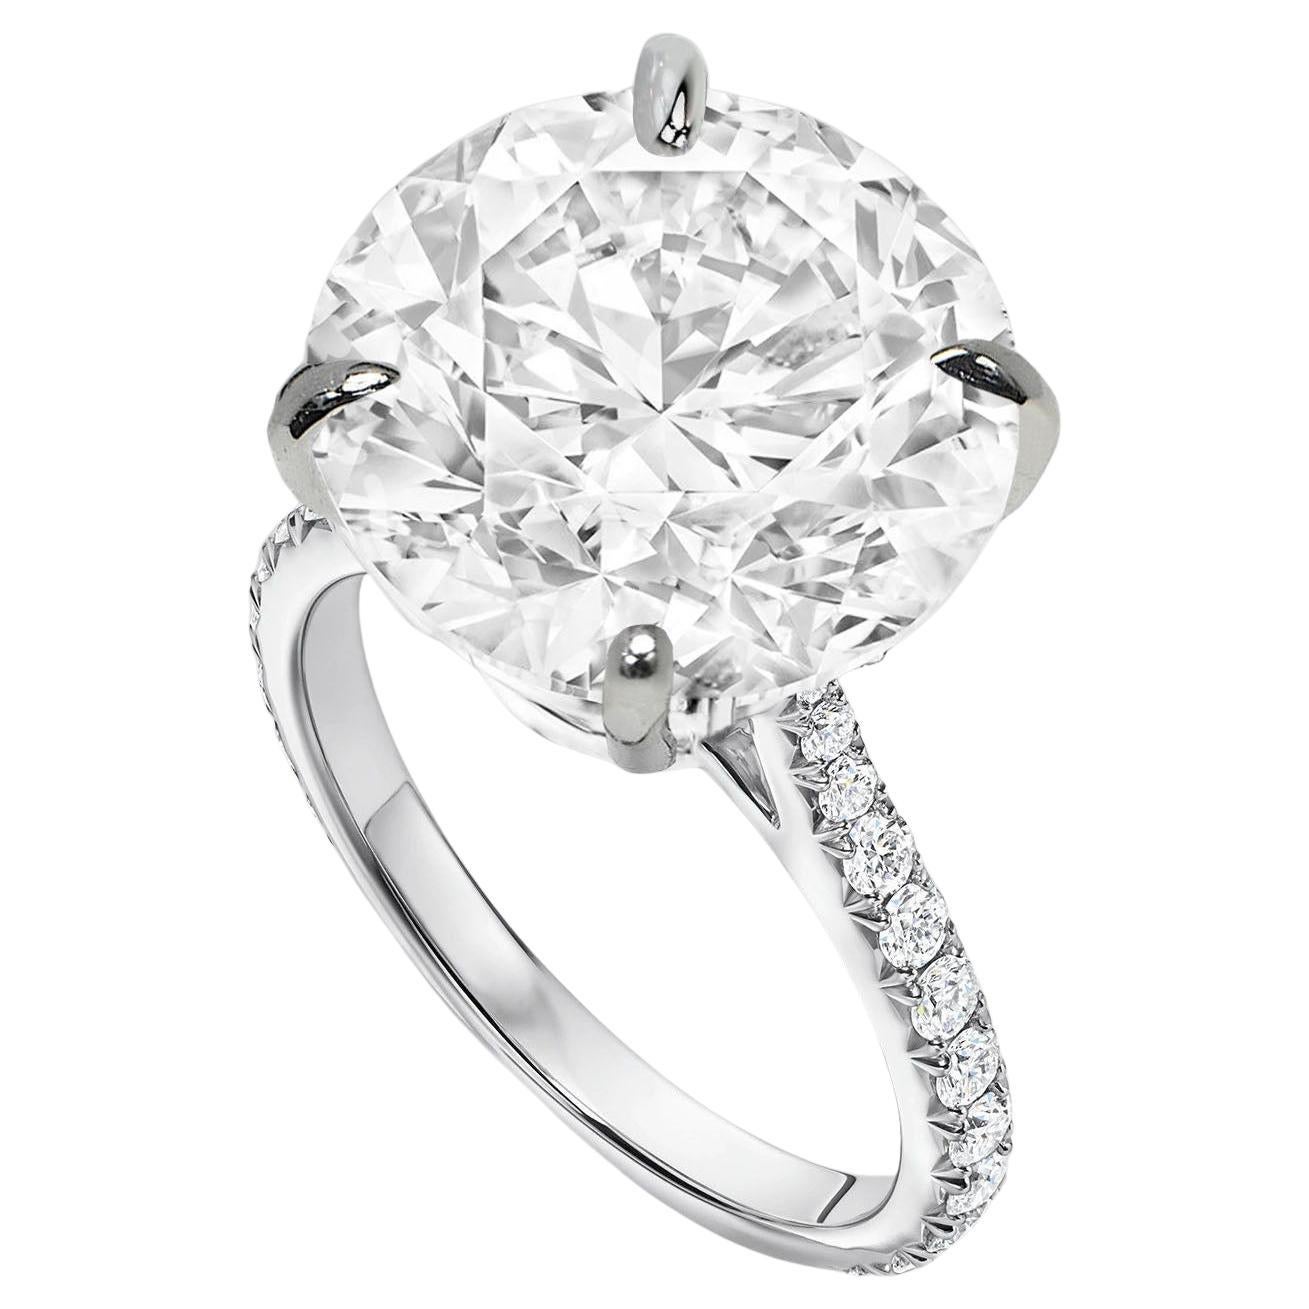 GIA Certified 6.24 Carat Round Brilliant Cut Diamond Ring